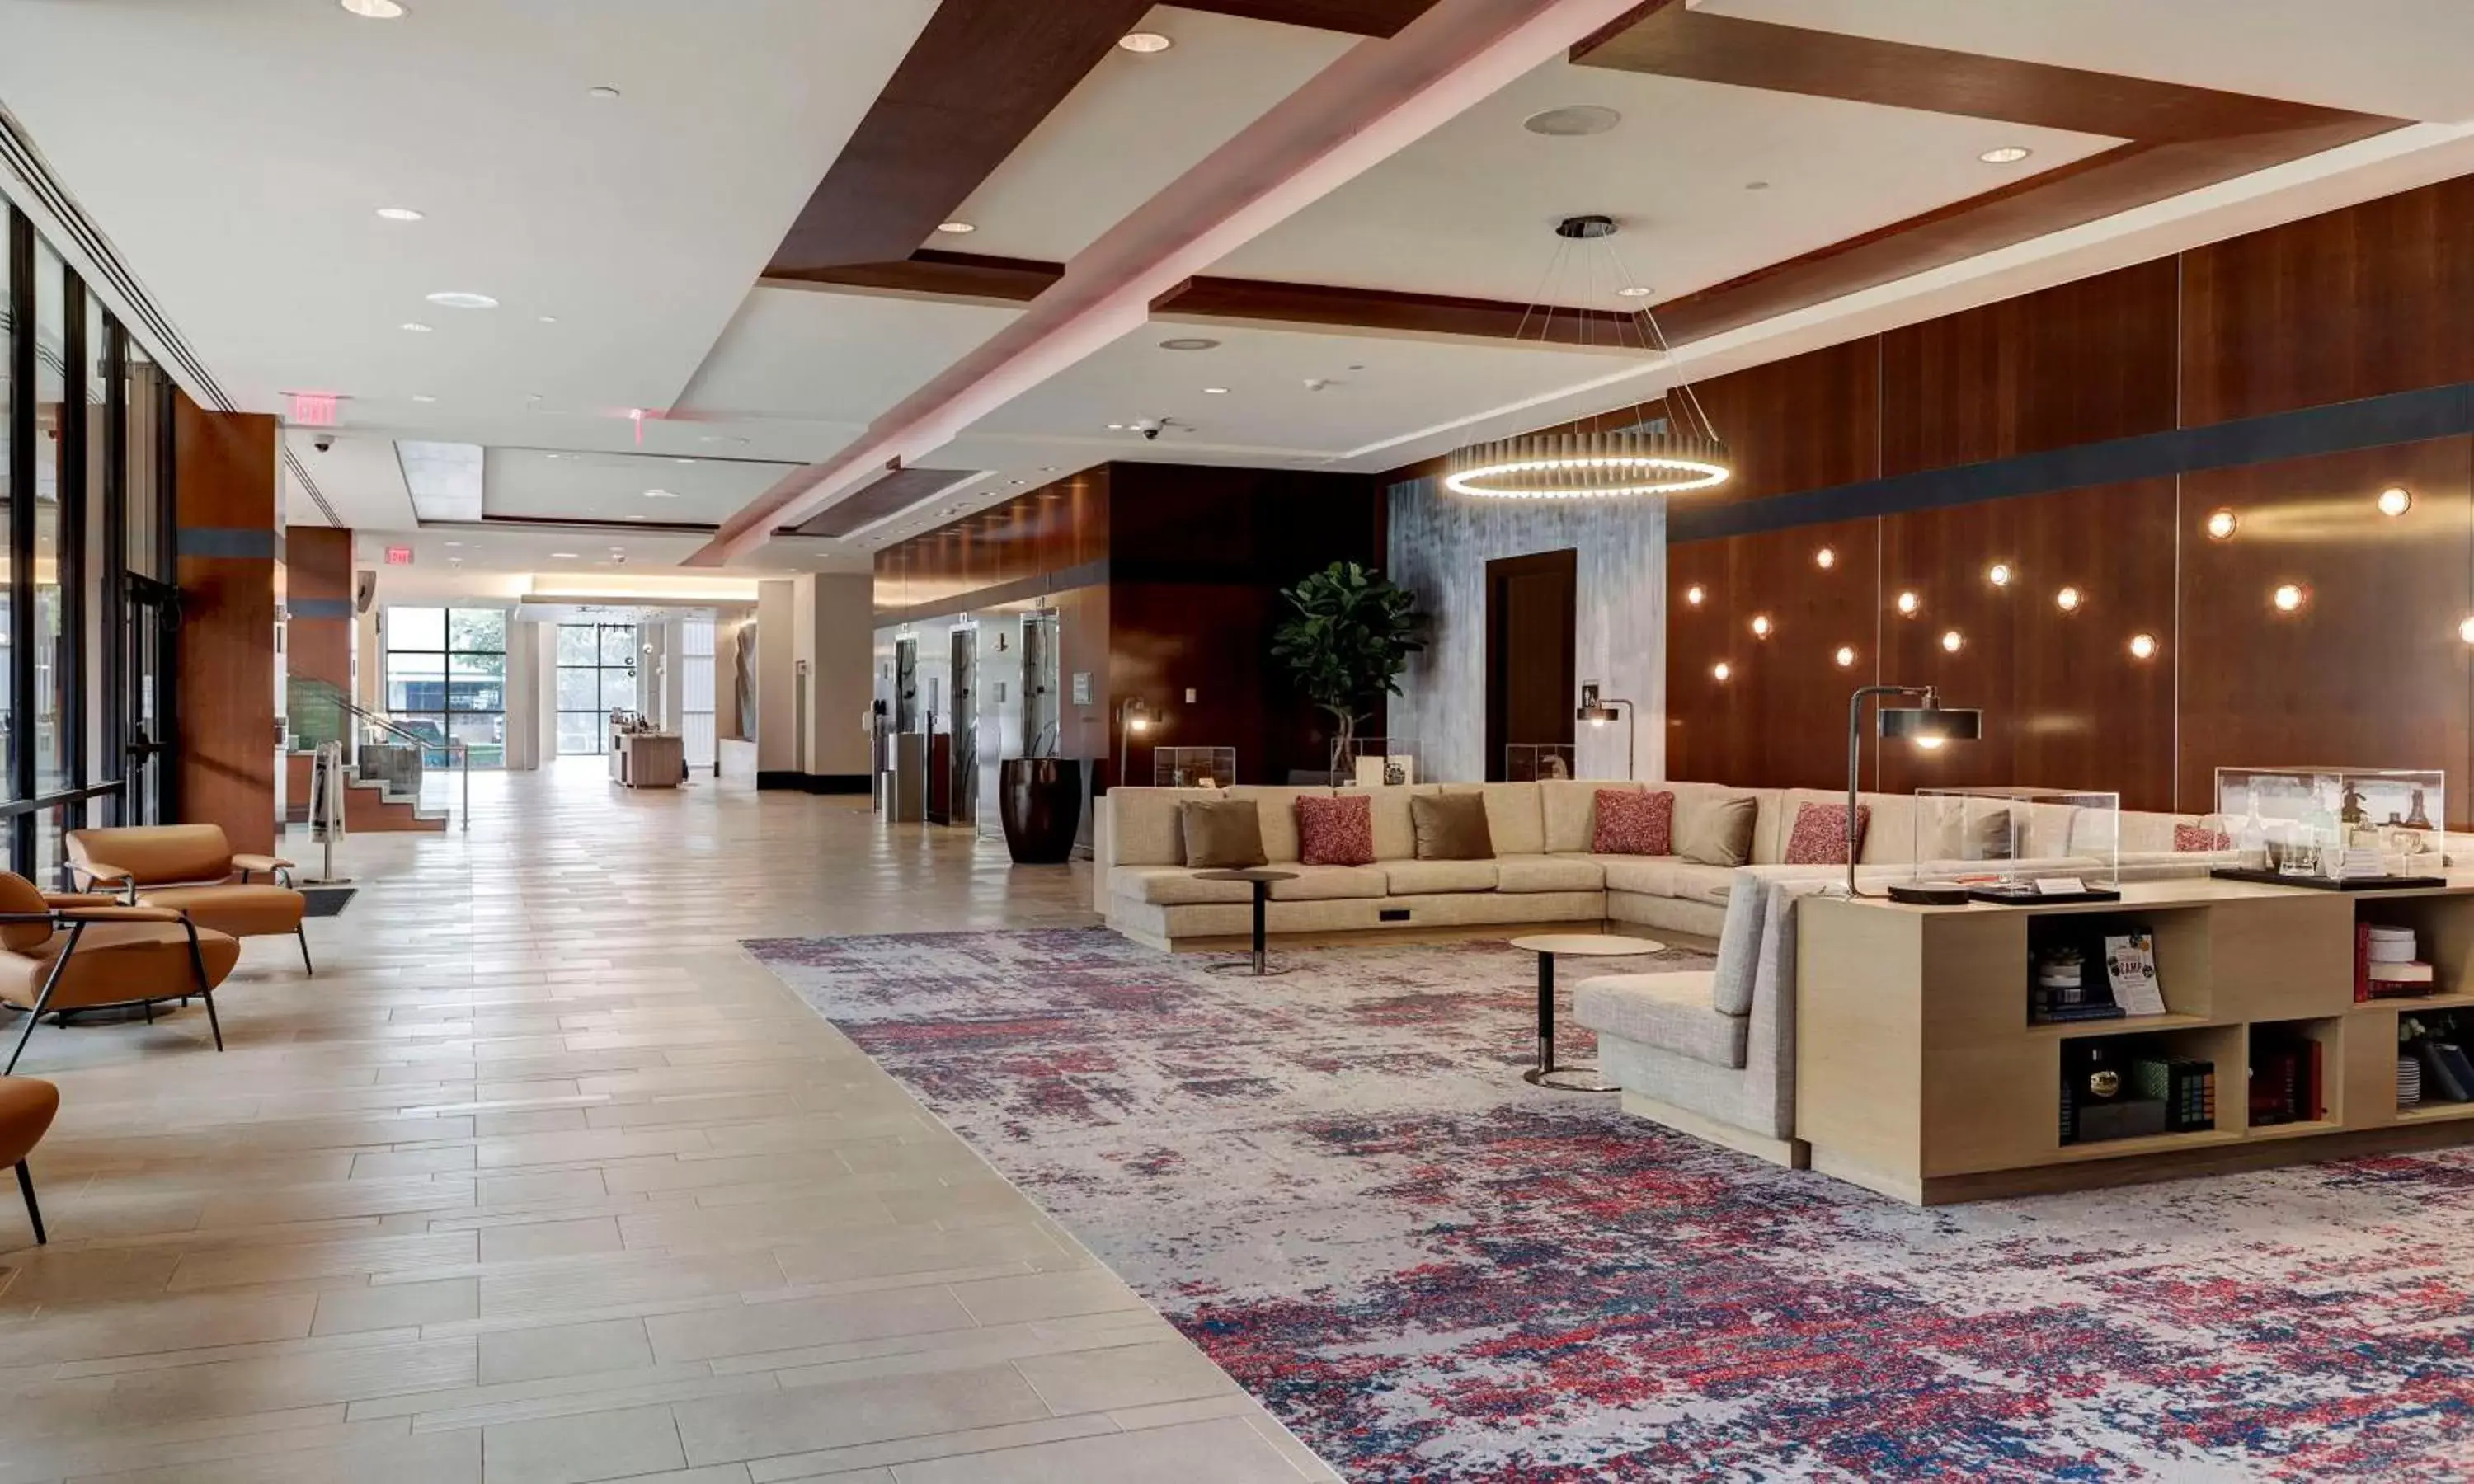 Lobby or reception in Hilton University of Houston